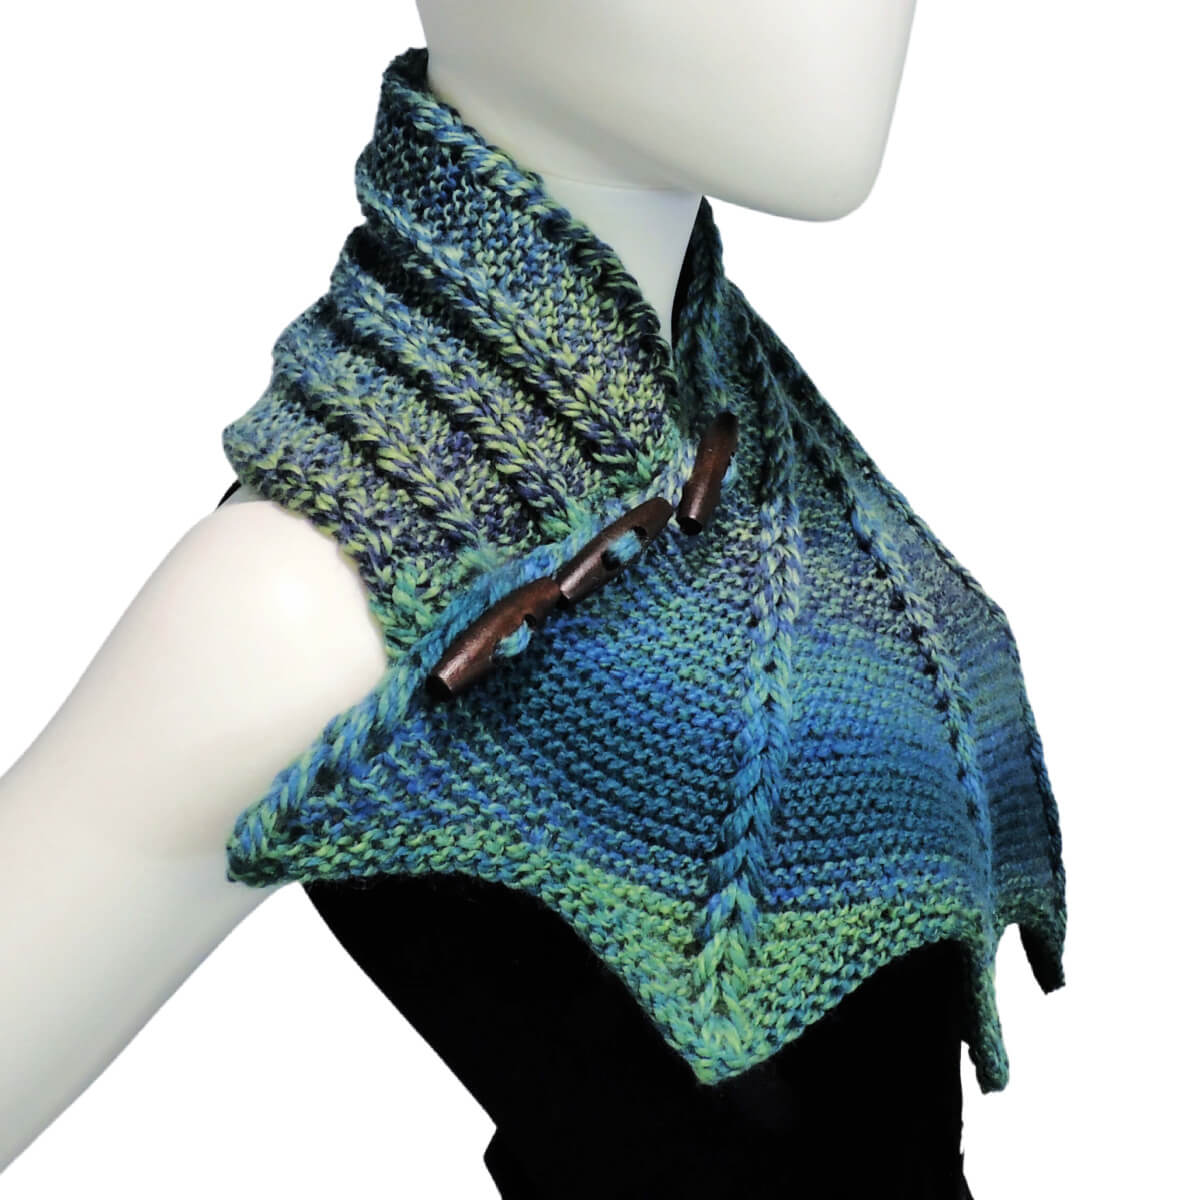 Stunning Jacob's Ladder Knit Pattern, Make the Dragon Wing Cowl